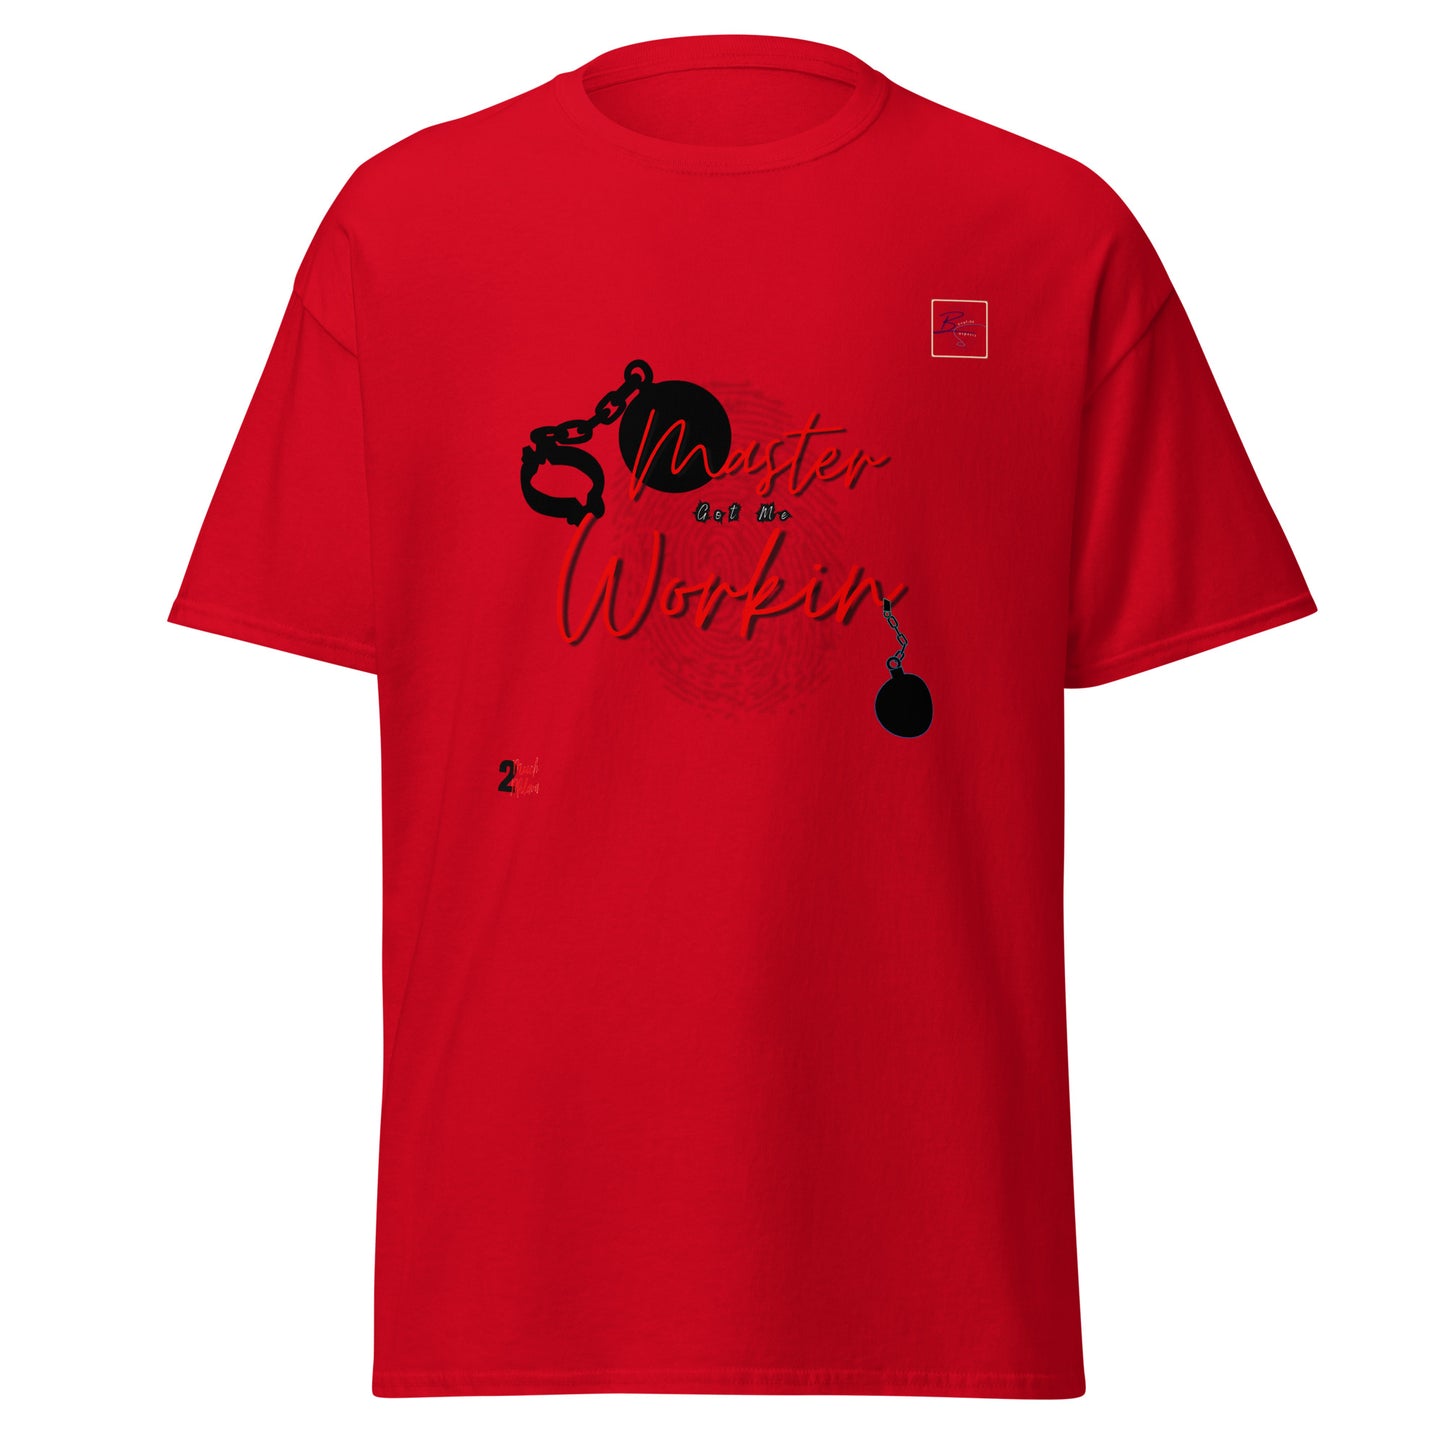 'MGMW 2 Ball & Chain' 2 T-Shirt